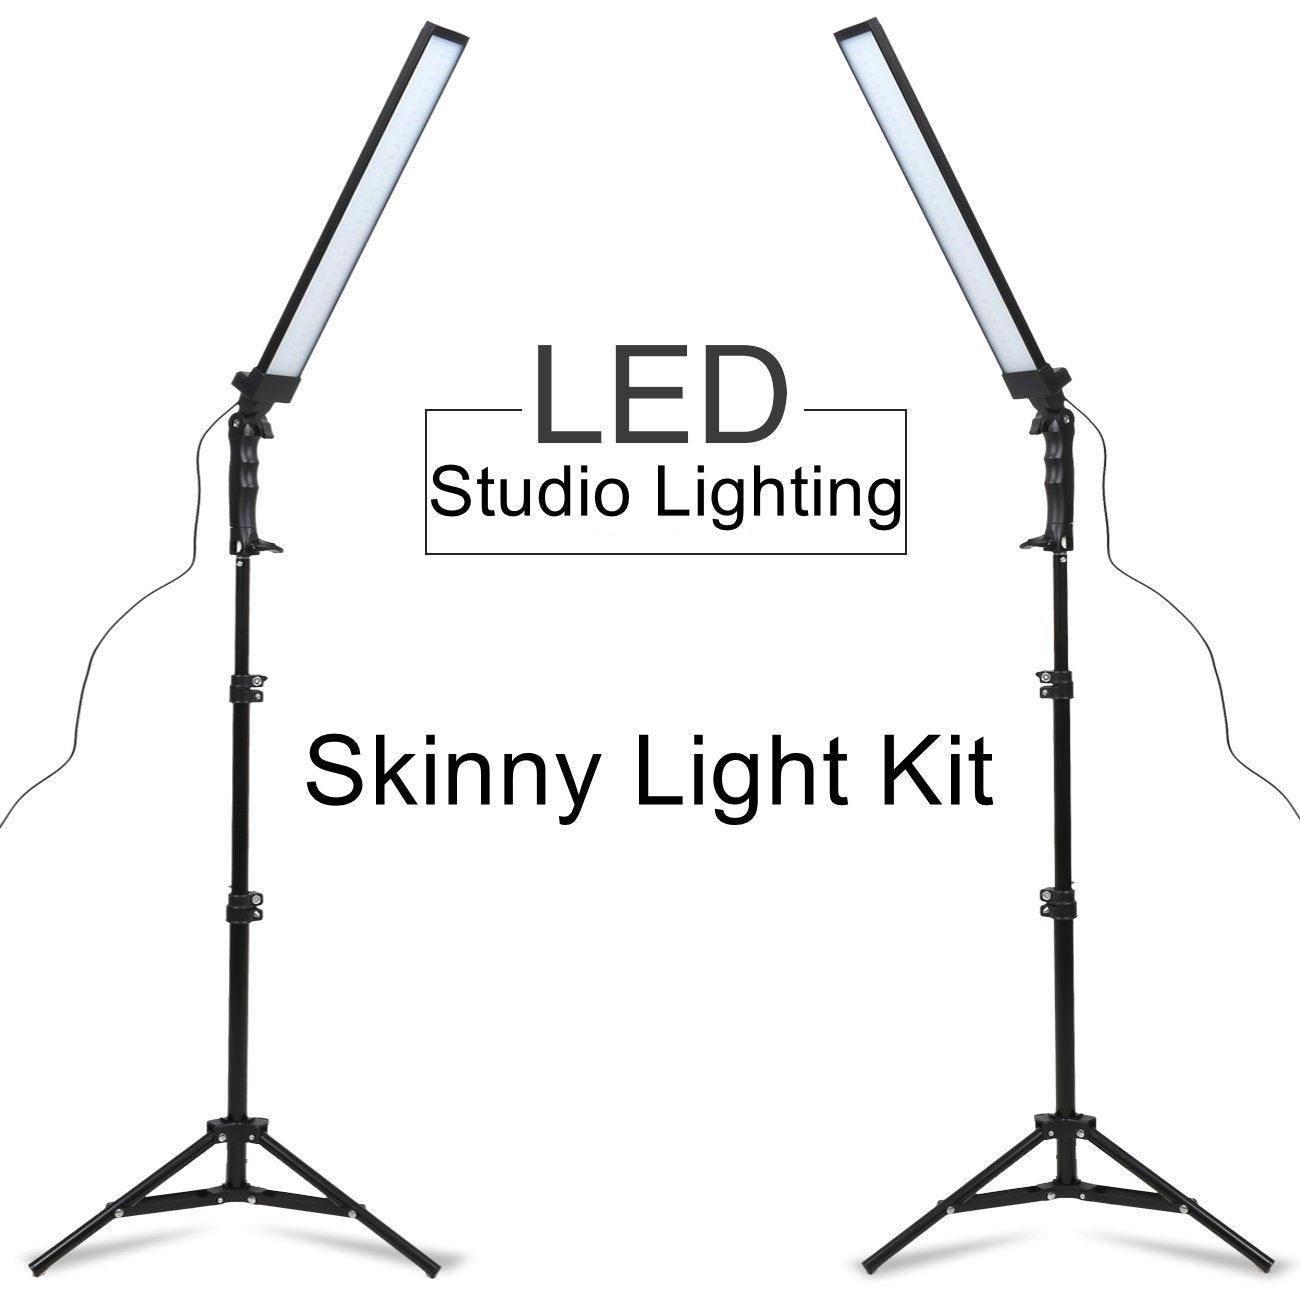 Skinny LED Lighting Kit with text